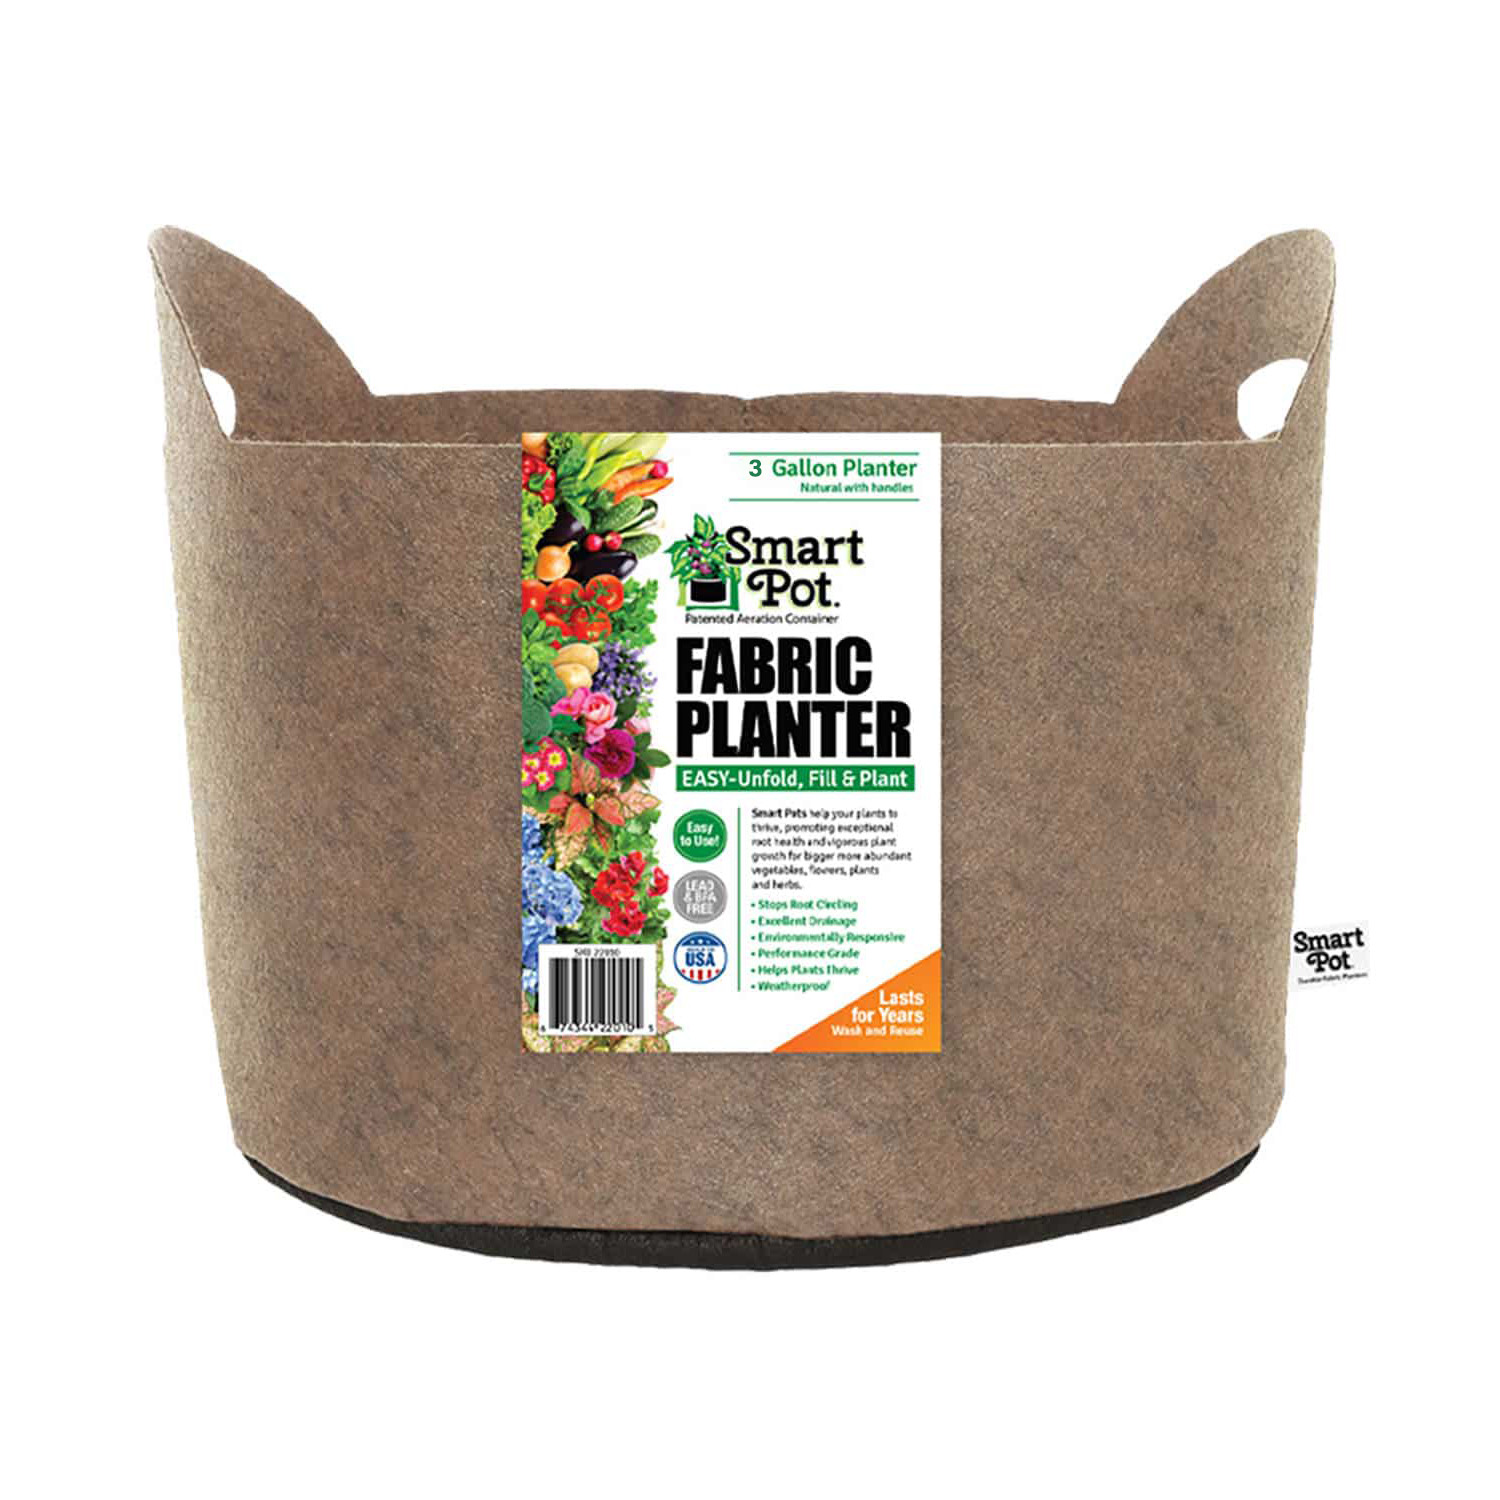 https://keeneorganics.com/wp-content/uploads/2022/01/Smart-Pot_Fabric-Planter_Natural_Cut-Handles-3-Gallons.jpg